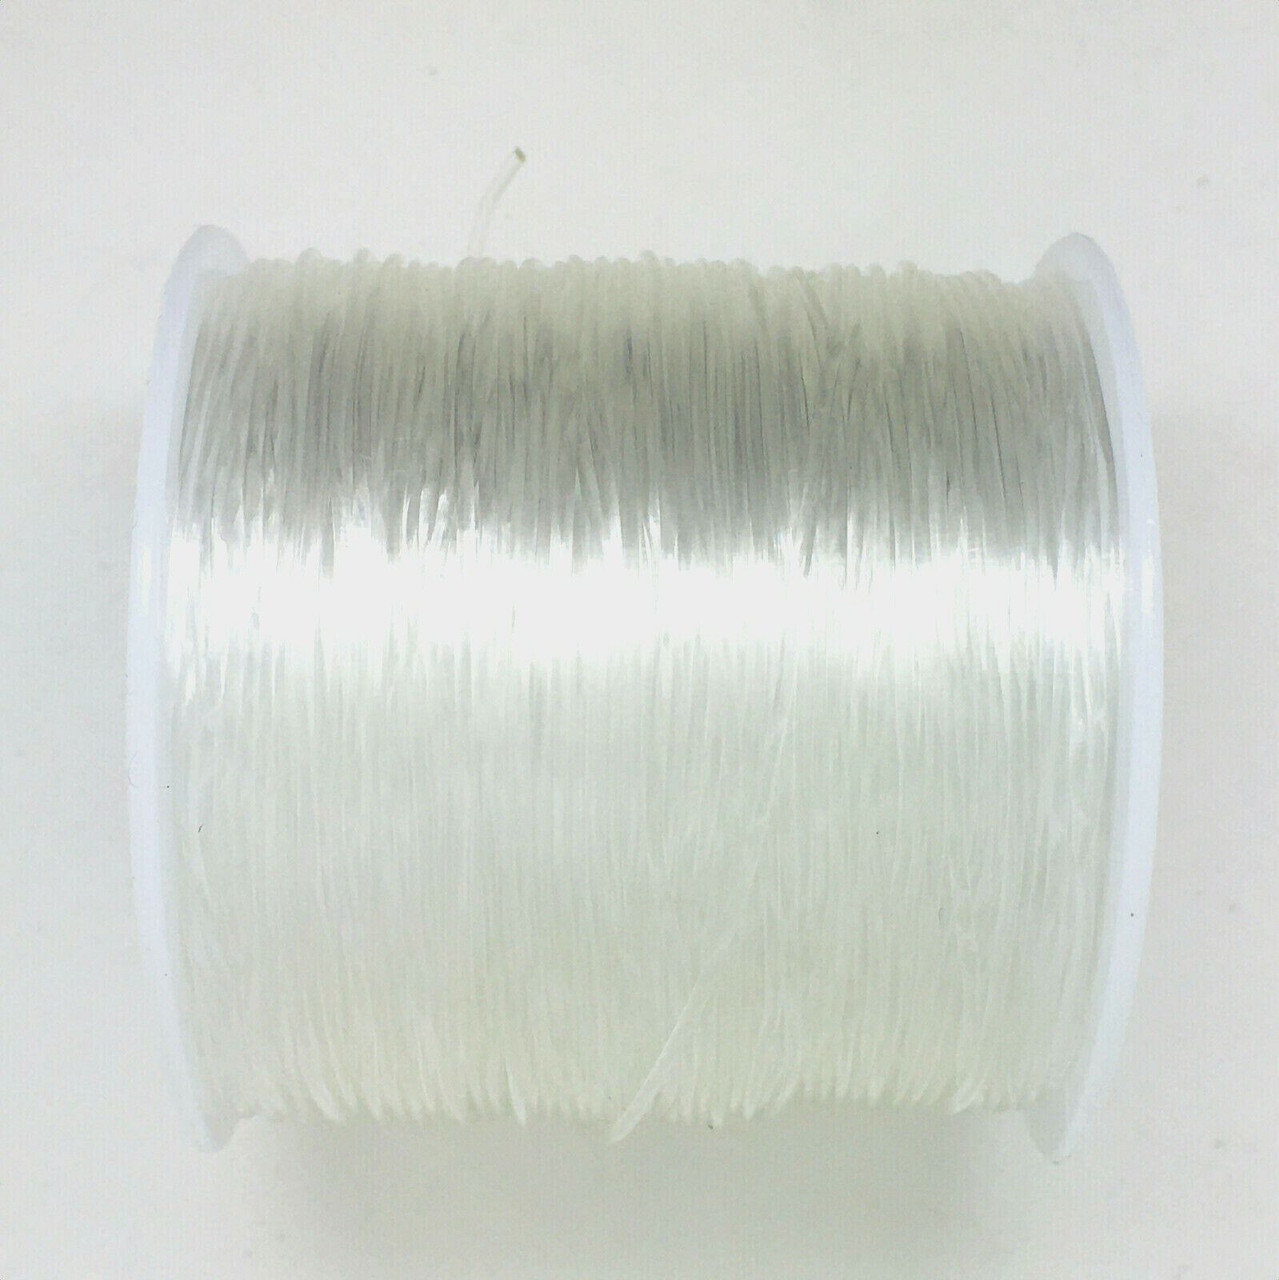 0.8mm Crystal Tec elastic thread, 100m wholesale reel - clear